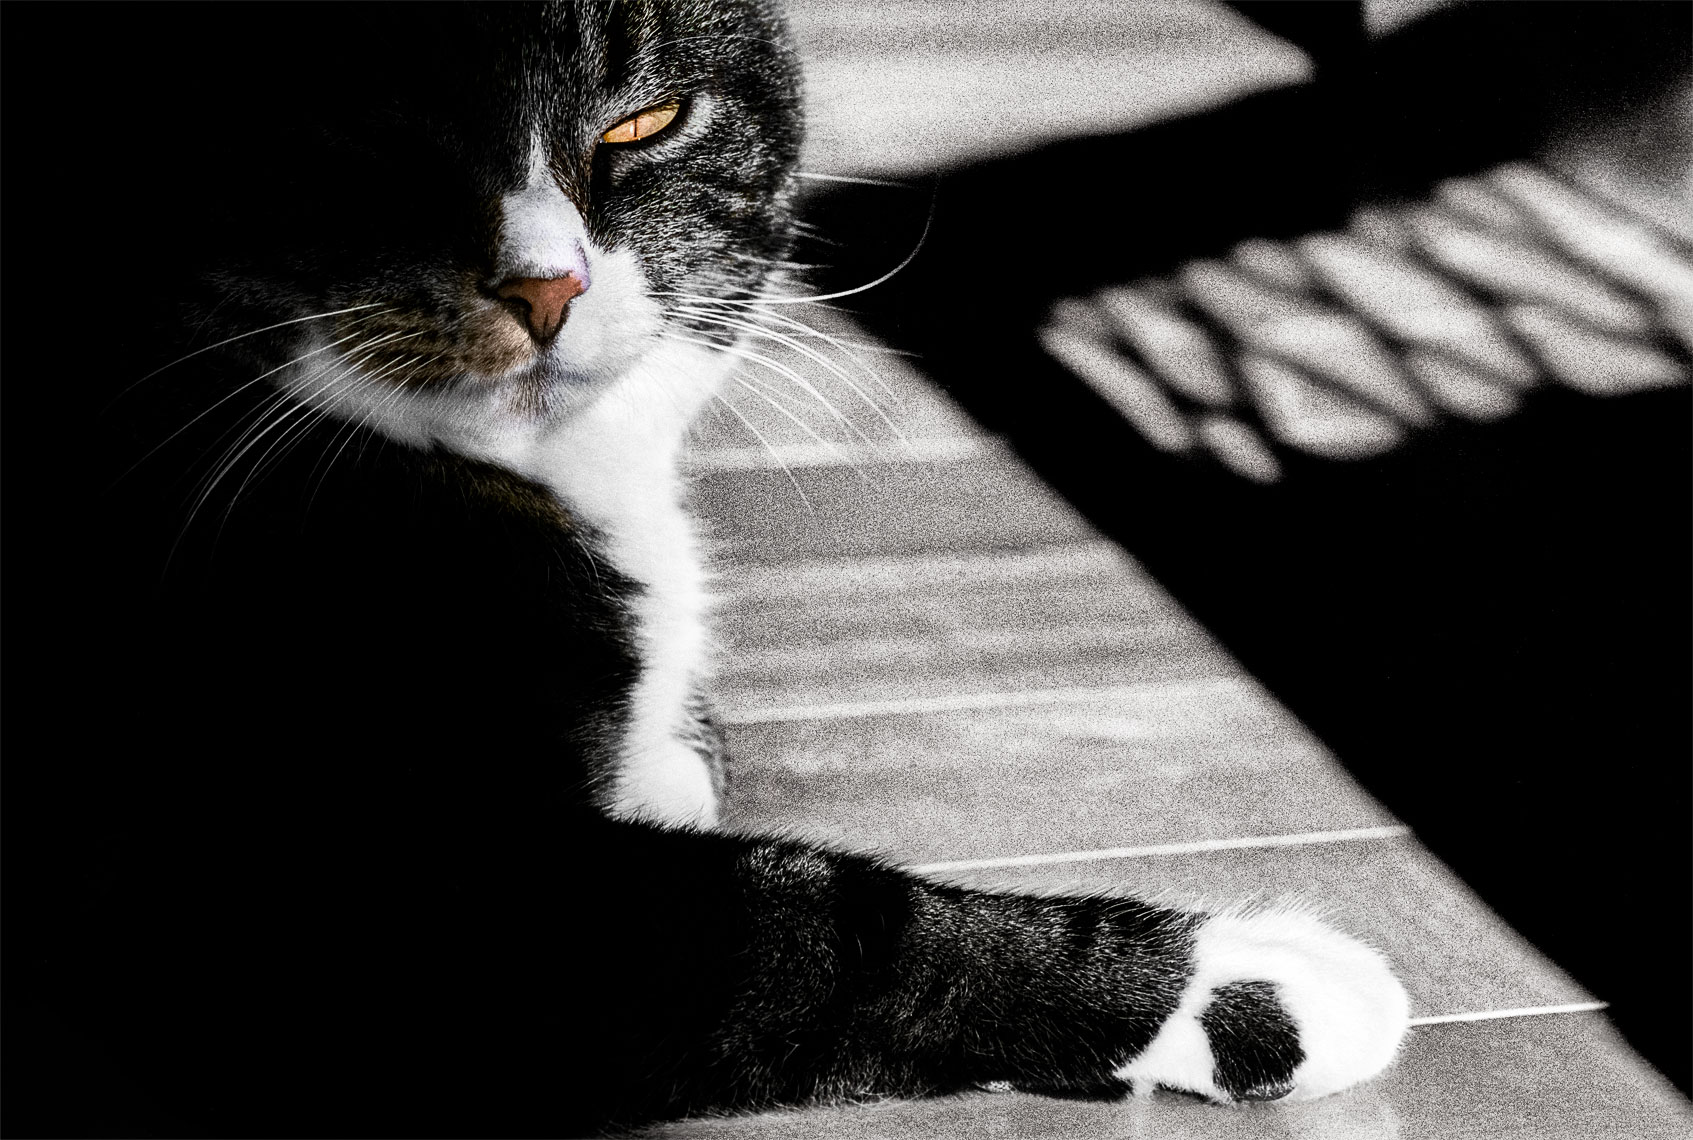 David Lebe; Hips-Shadow-eye-v9-1999.jpg, cat photograph